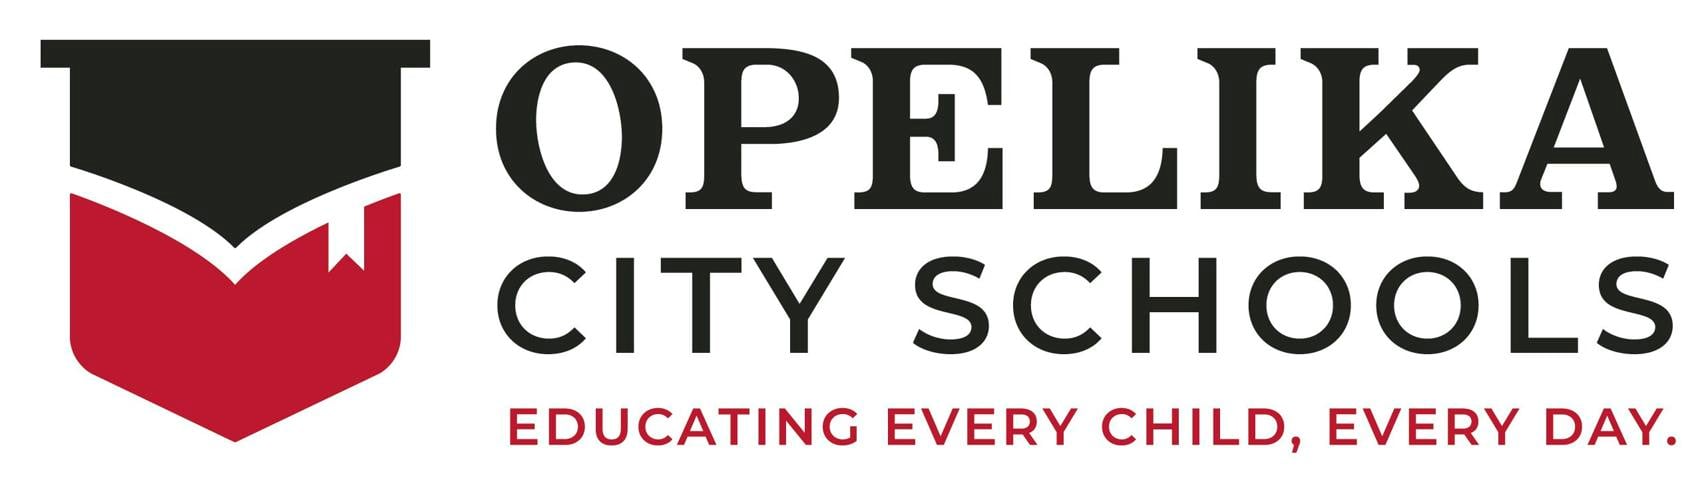 Opelika City Schools logo